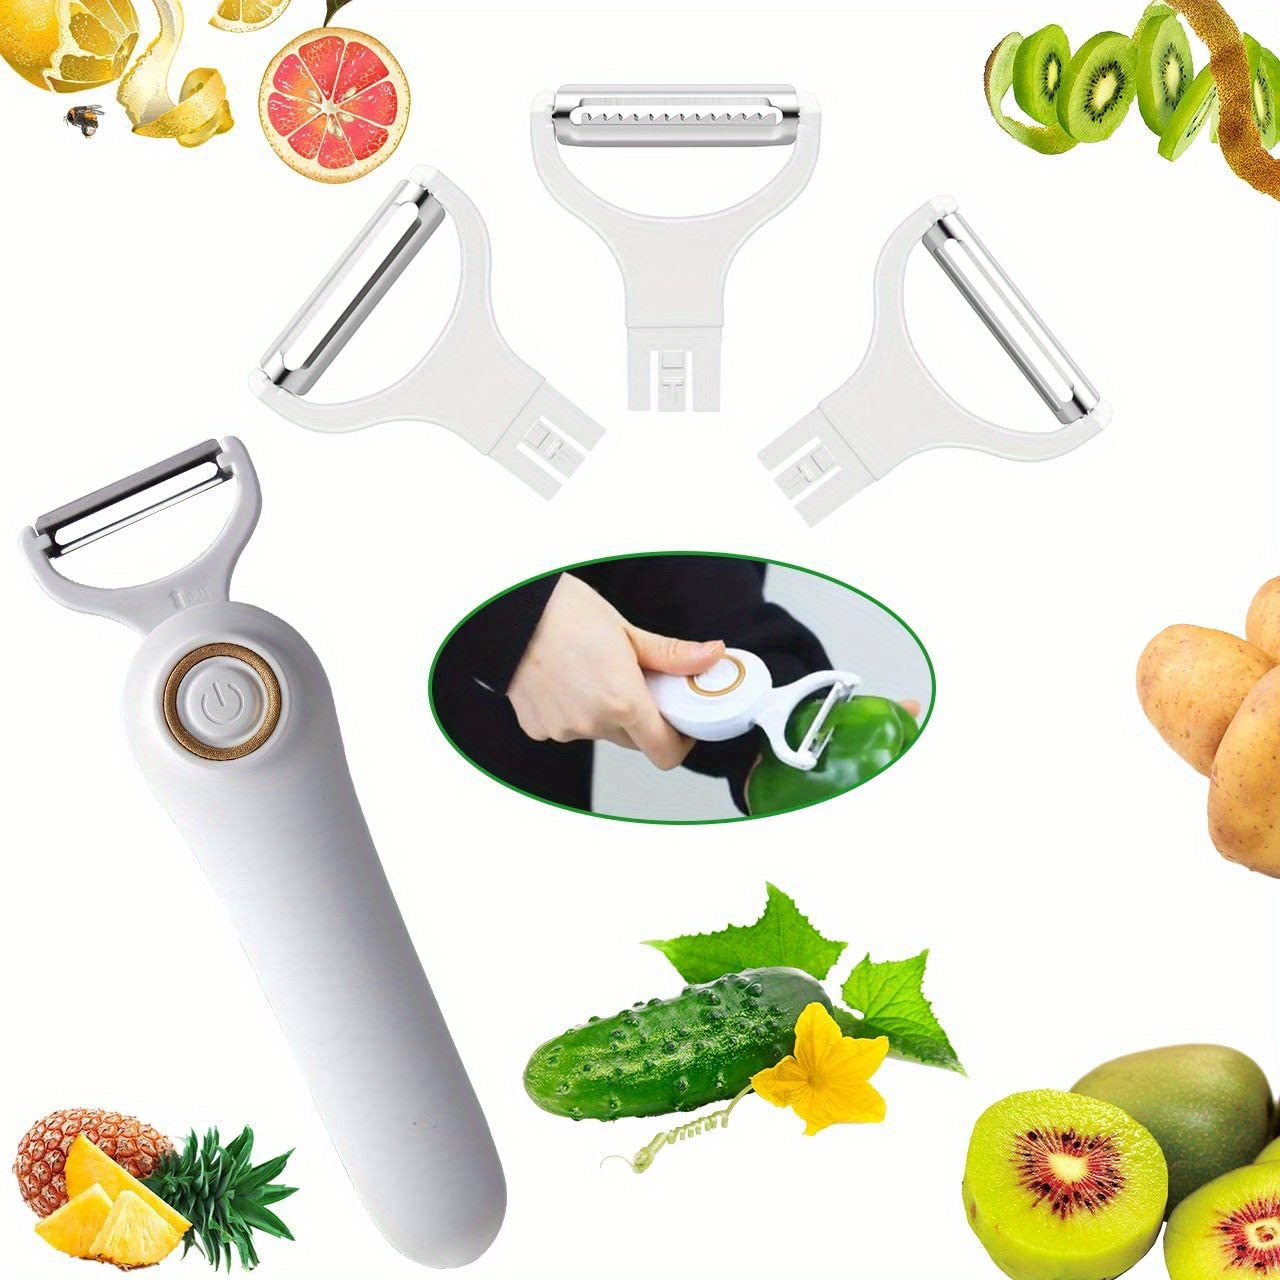 PANGPENG Electric Potato Peeler, Handheld Electric Vegetables and Fruit Peeler 3-in-1 Pro Set, USB Rechargeable Kitchen Gadgets for Apples, Potato, Carrots, Cu